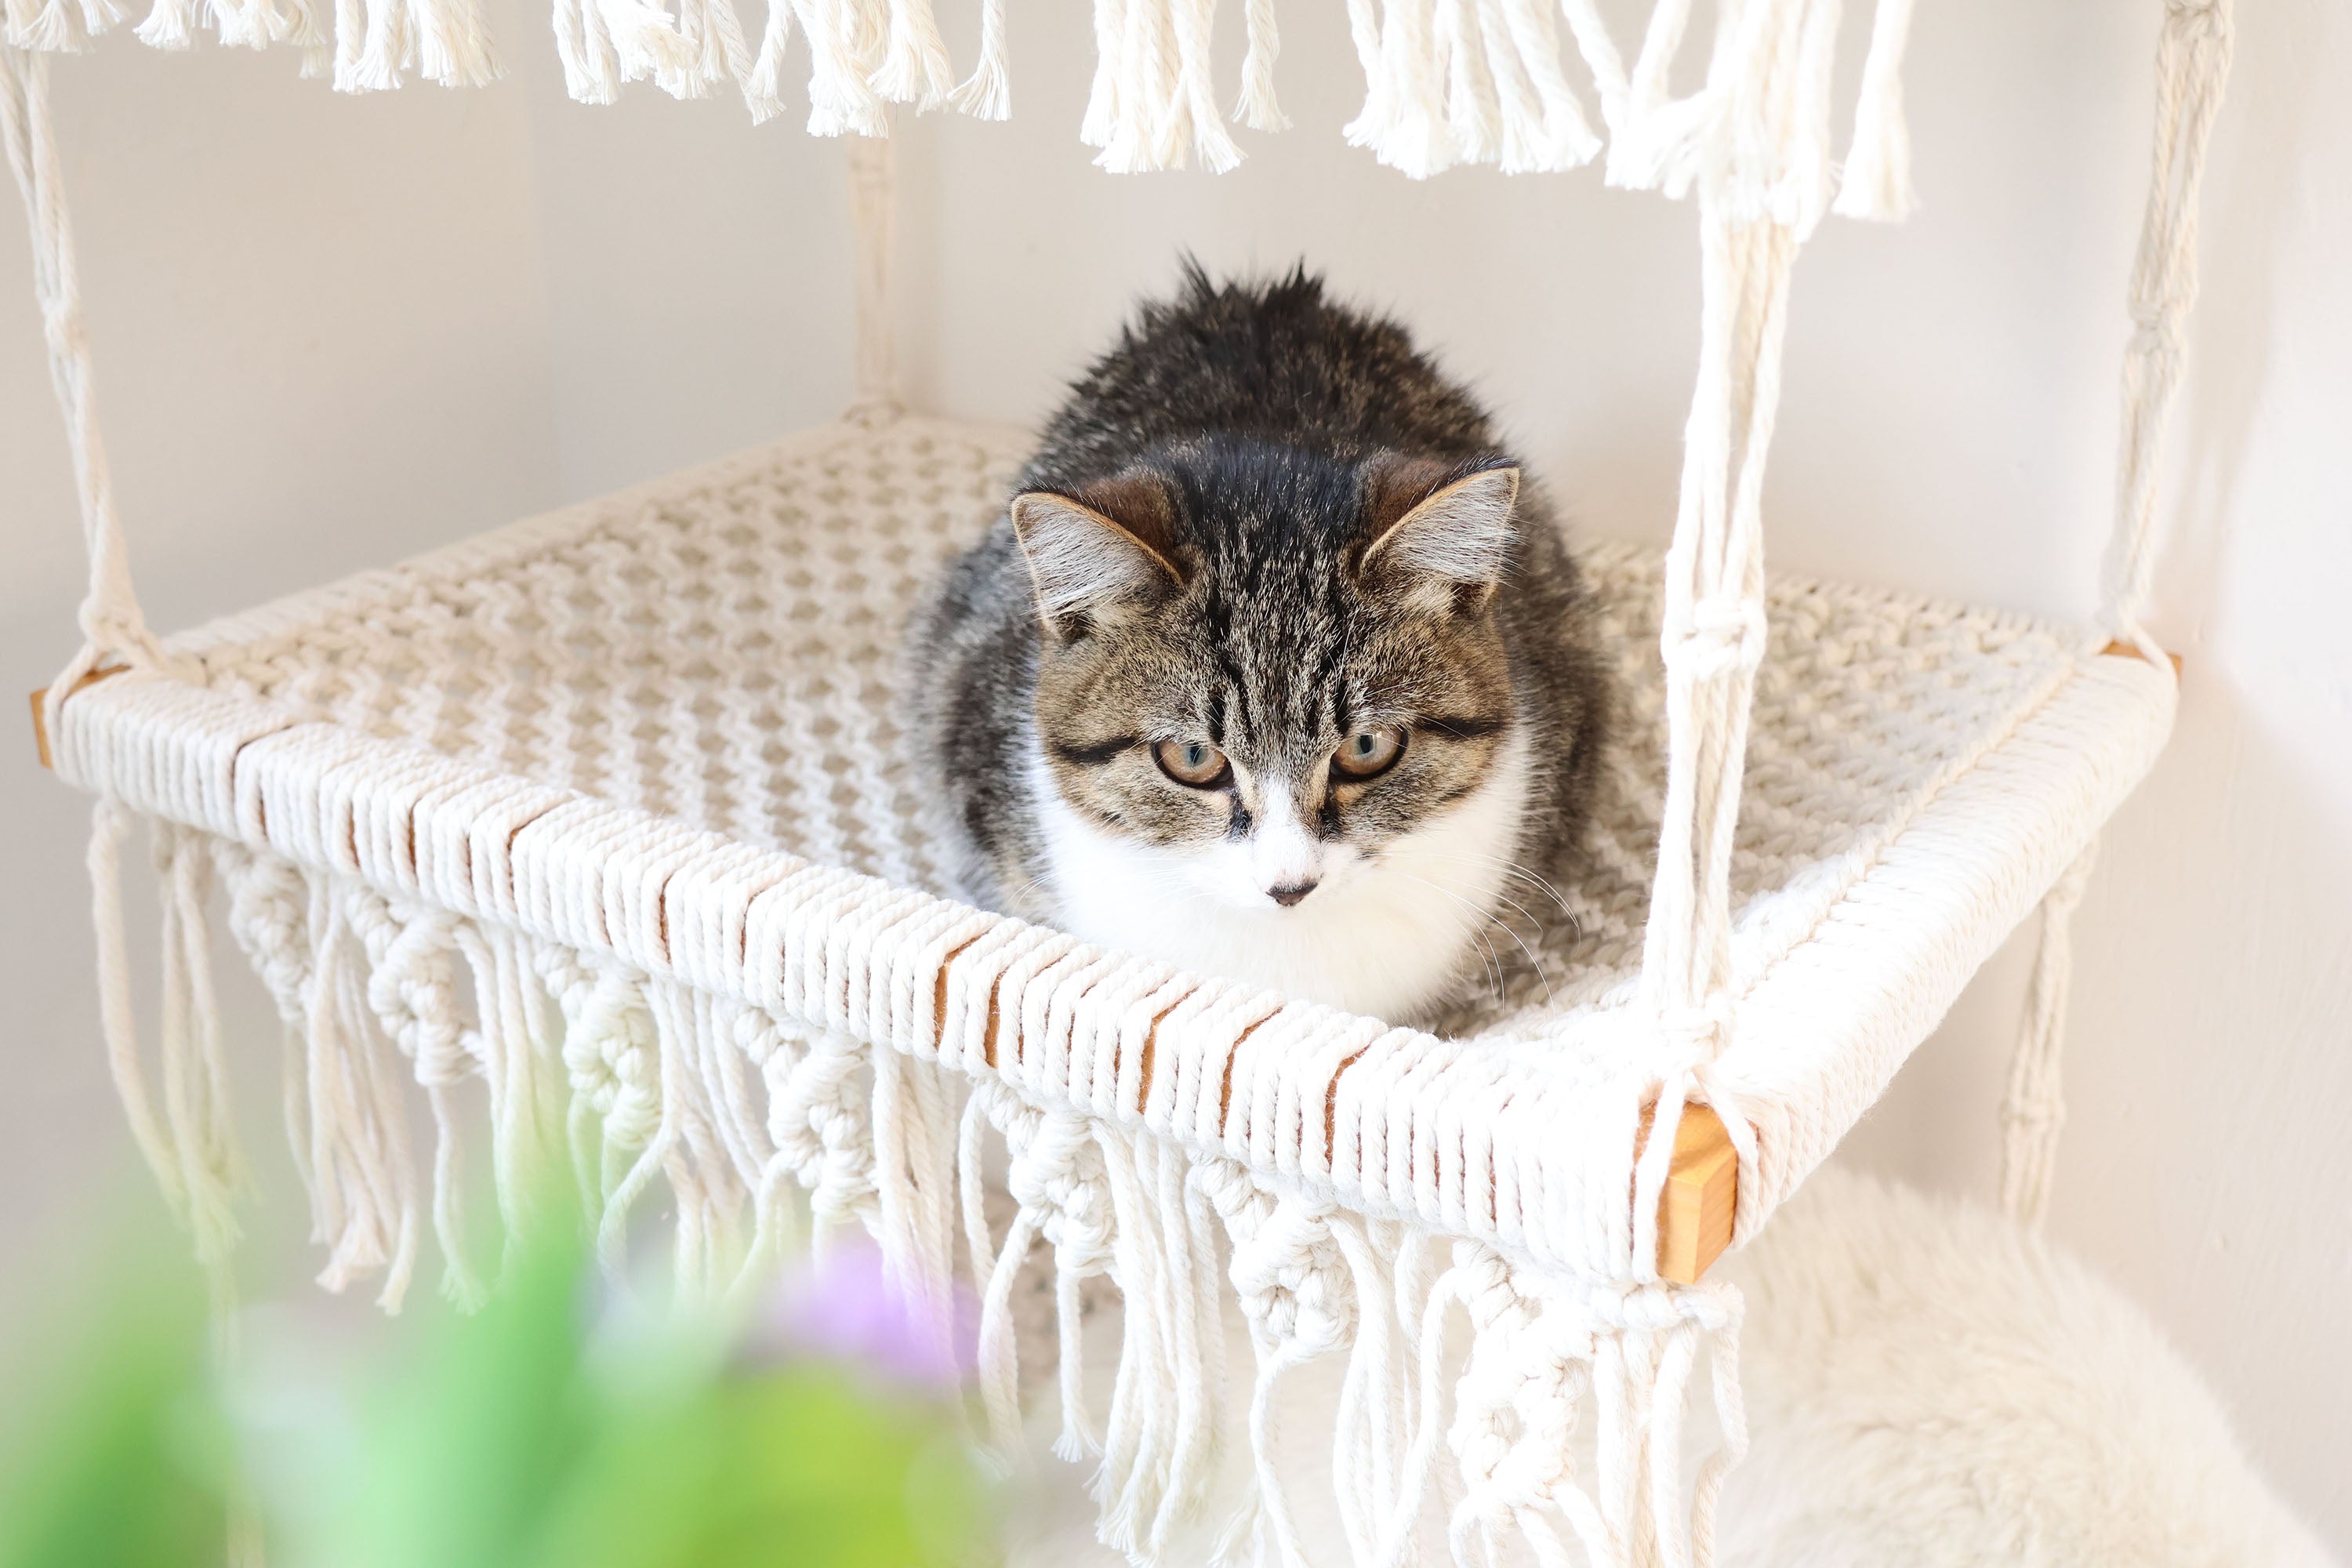 3 tiers Cat Wall Bed/Cat Furniture/Cat Tree/Cat House, Macrame Cat Hammock/Pet Swing bed/shelves, Boho Home Decor/wall hanging